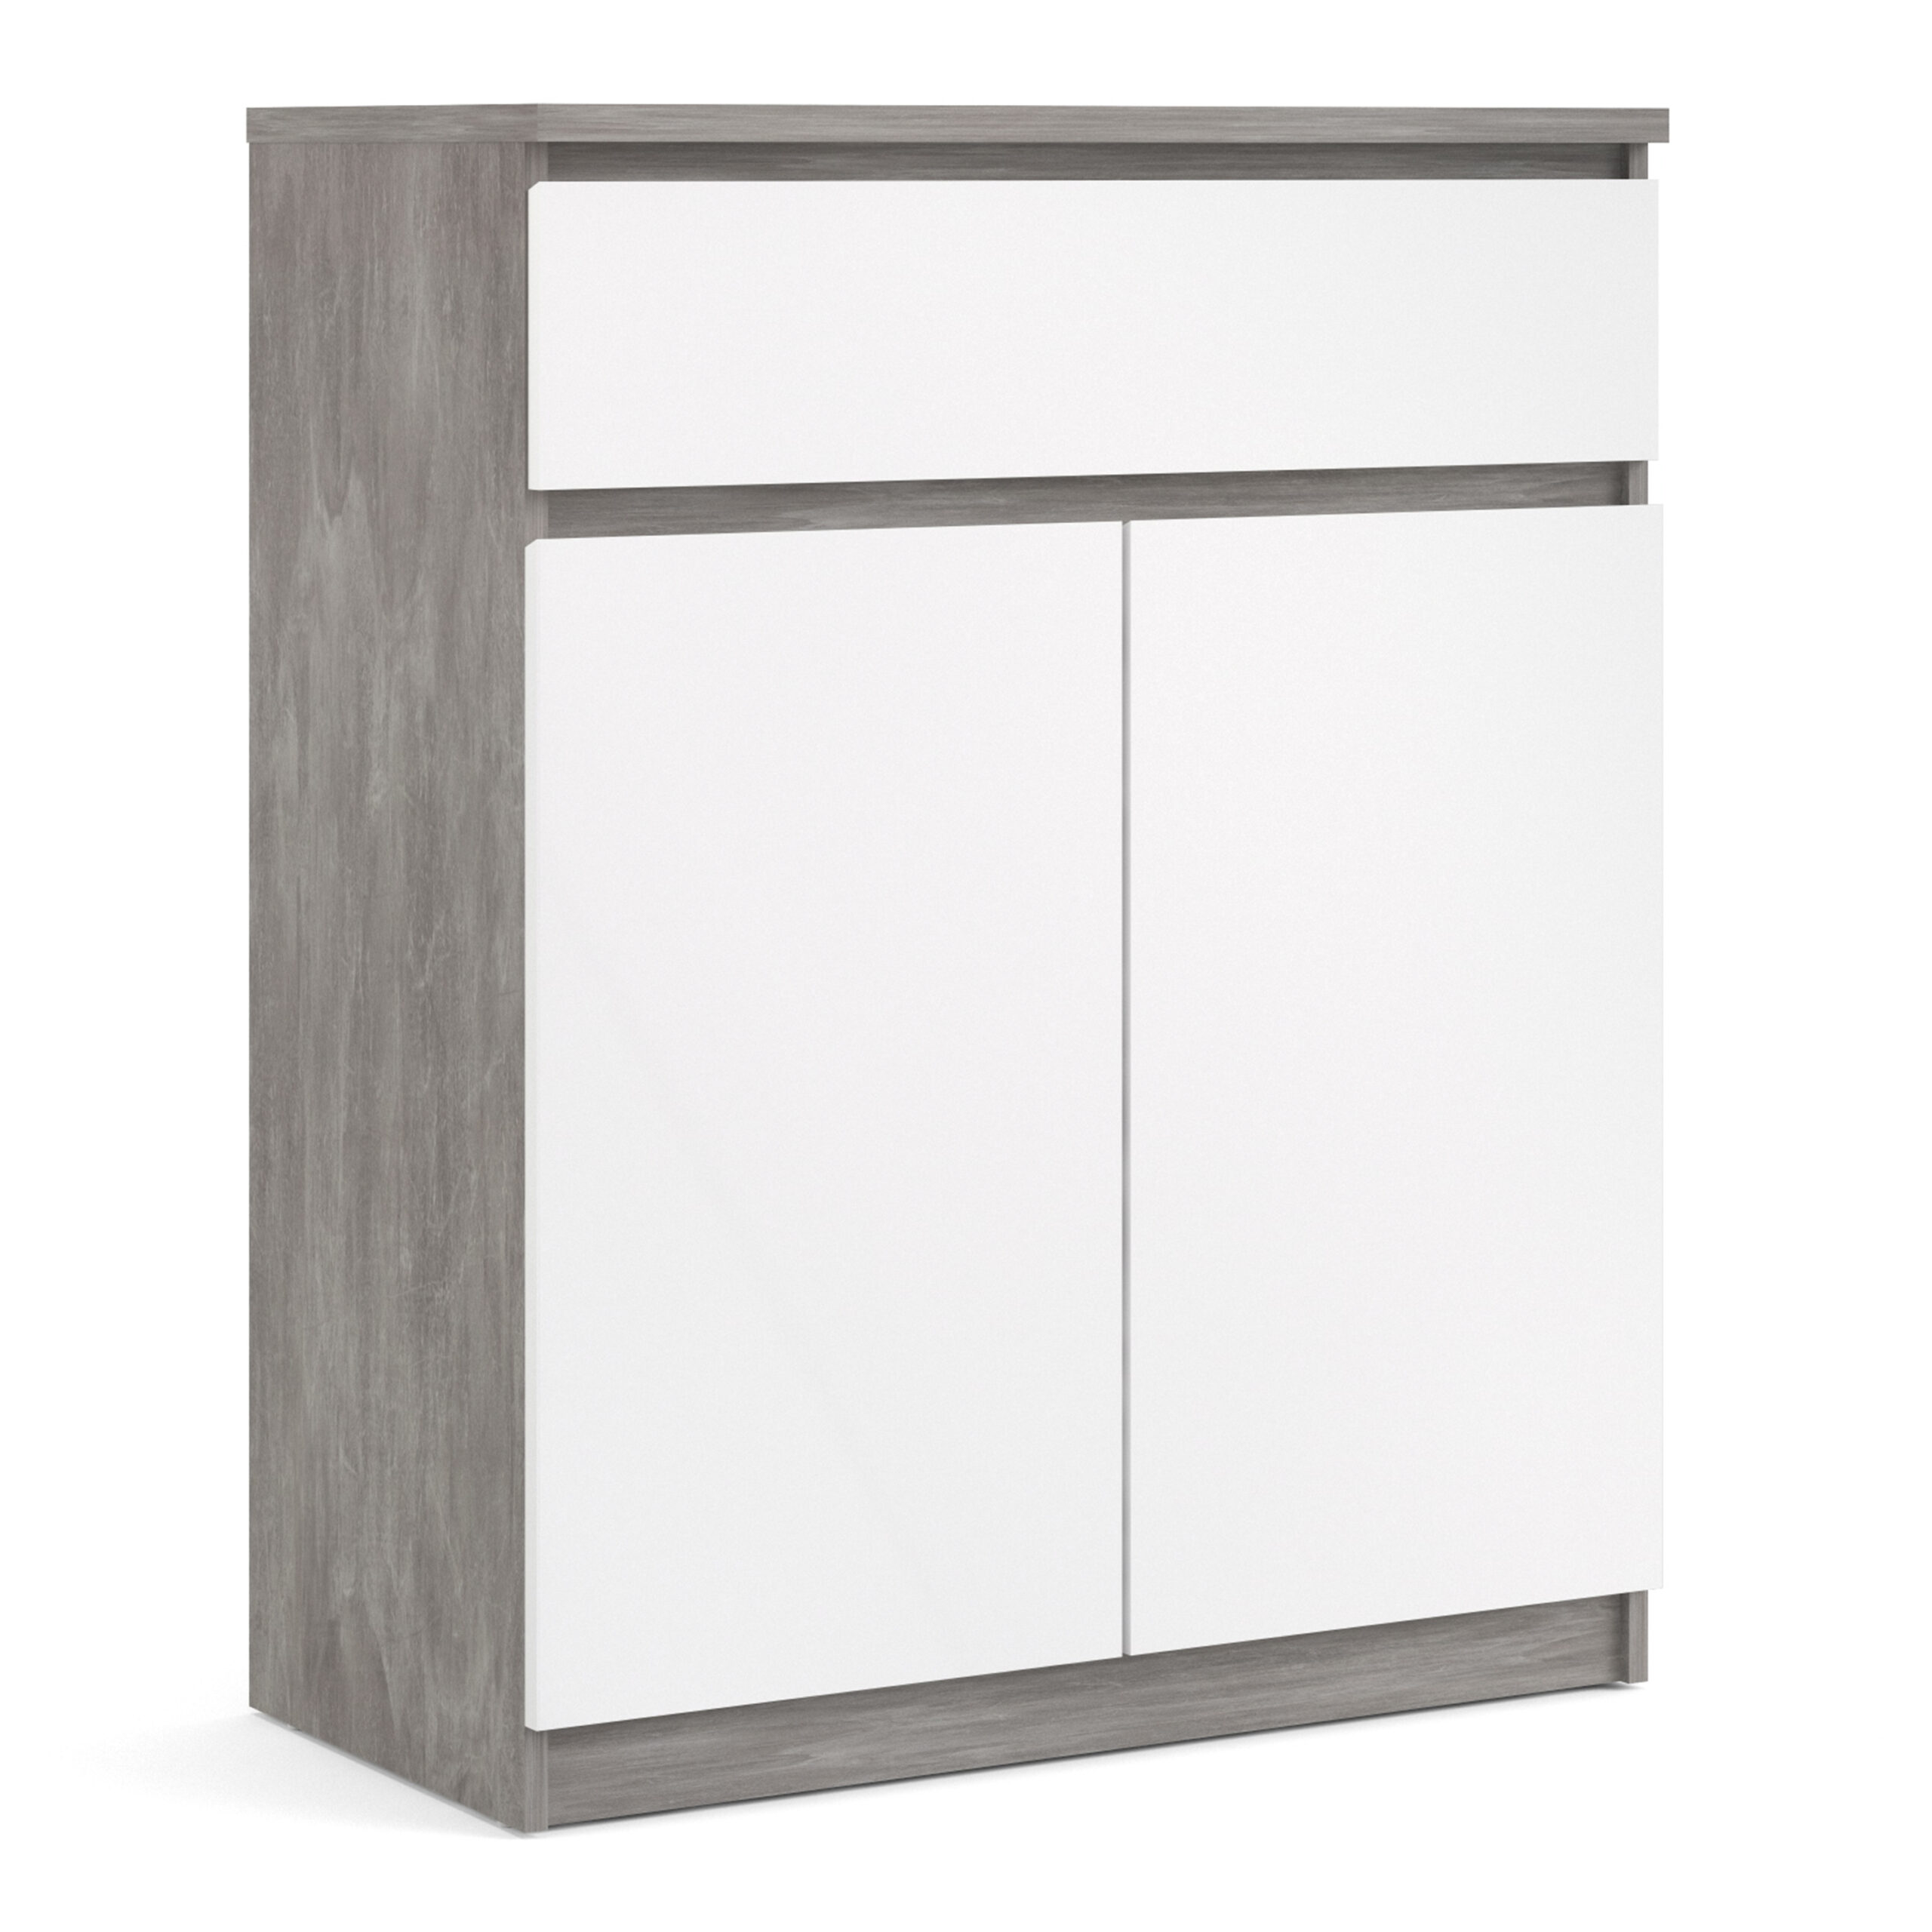 Nati Sideboard - 1 Drawer 2 Doors in Concrete White High Gloss